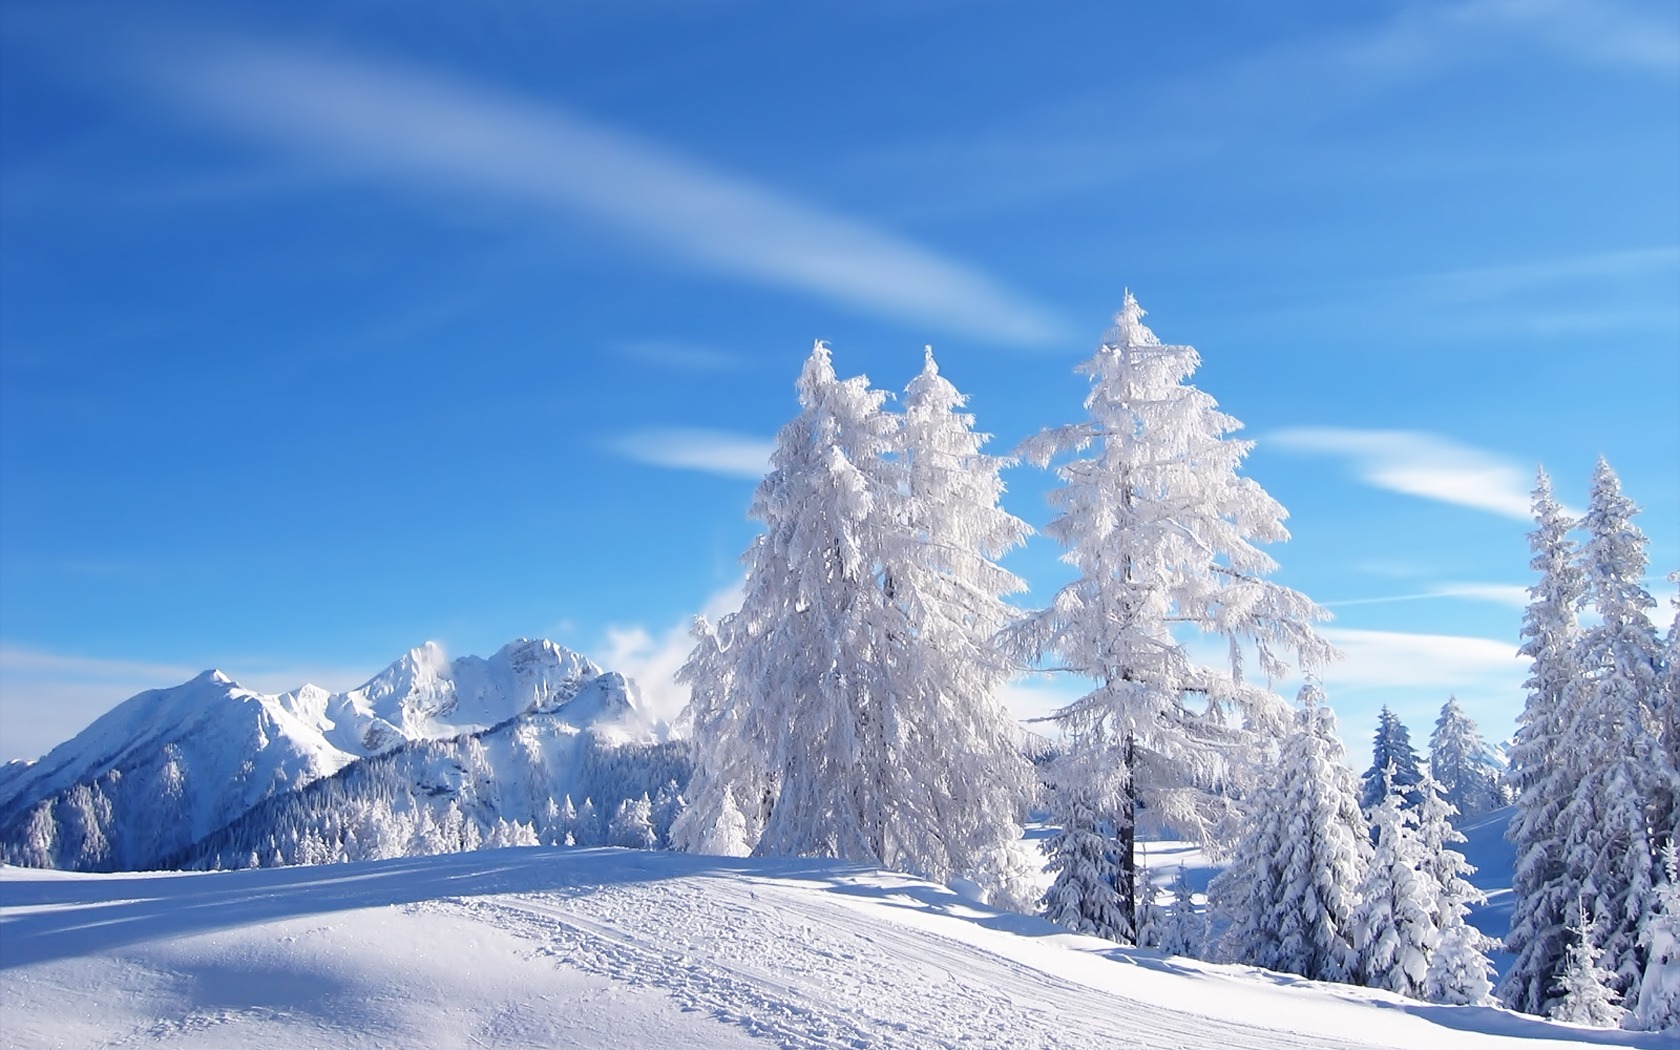 Snow Wallpaper Winter Nature In Jpg Format For